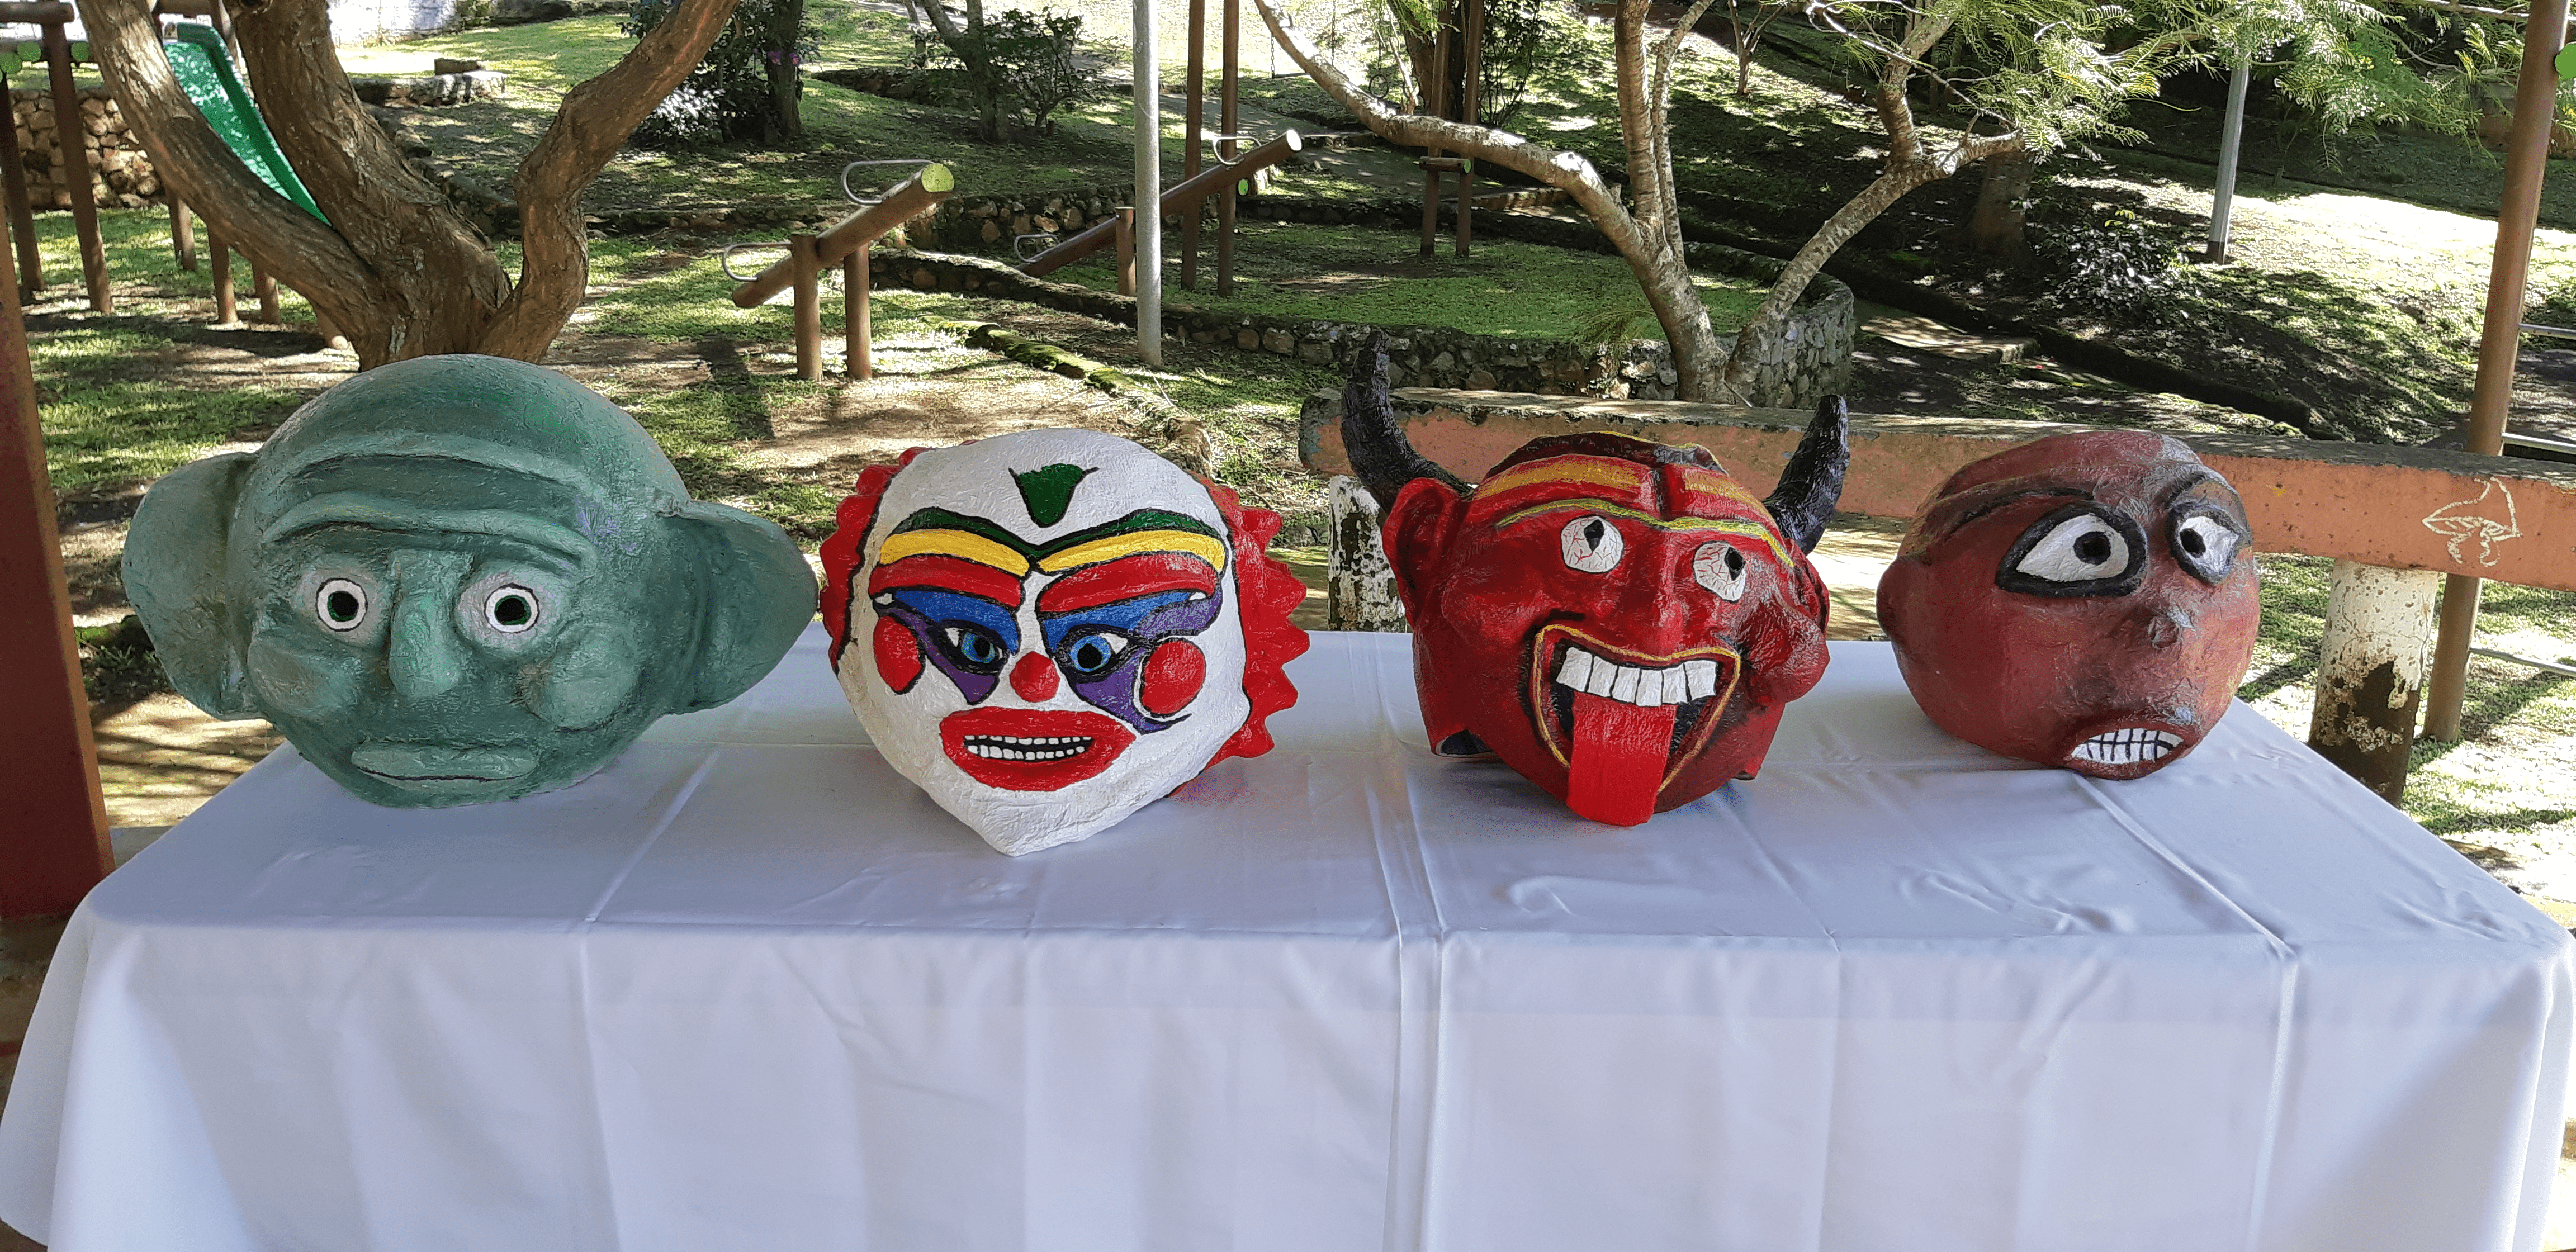 Día de la Mascarada Tradicional Costarricense